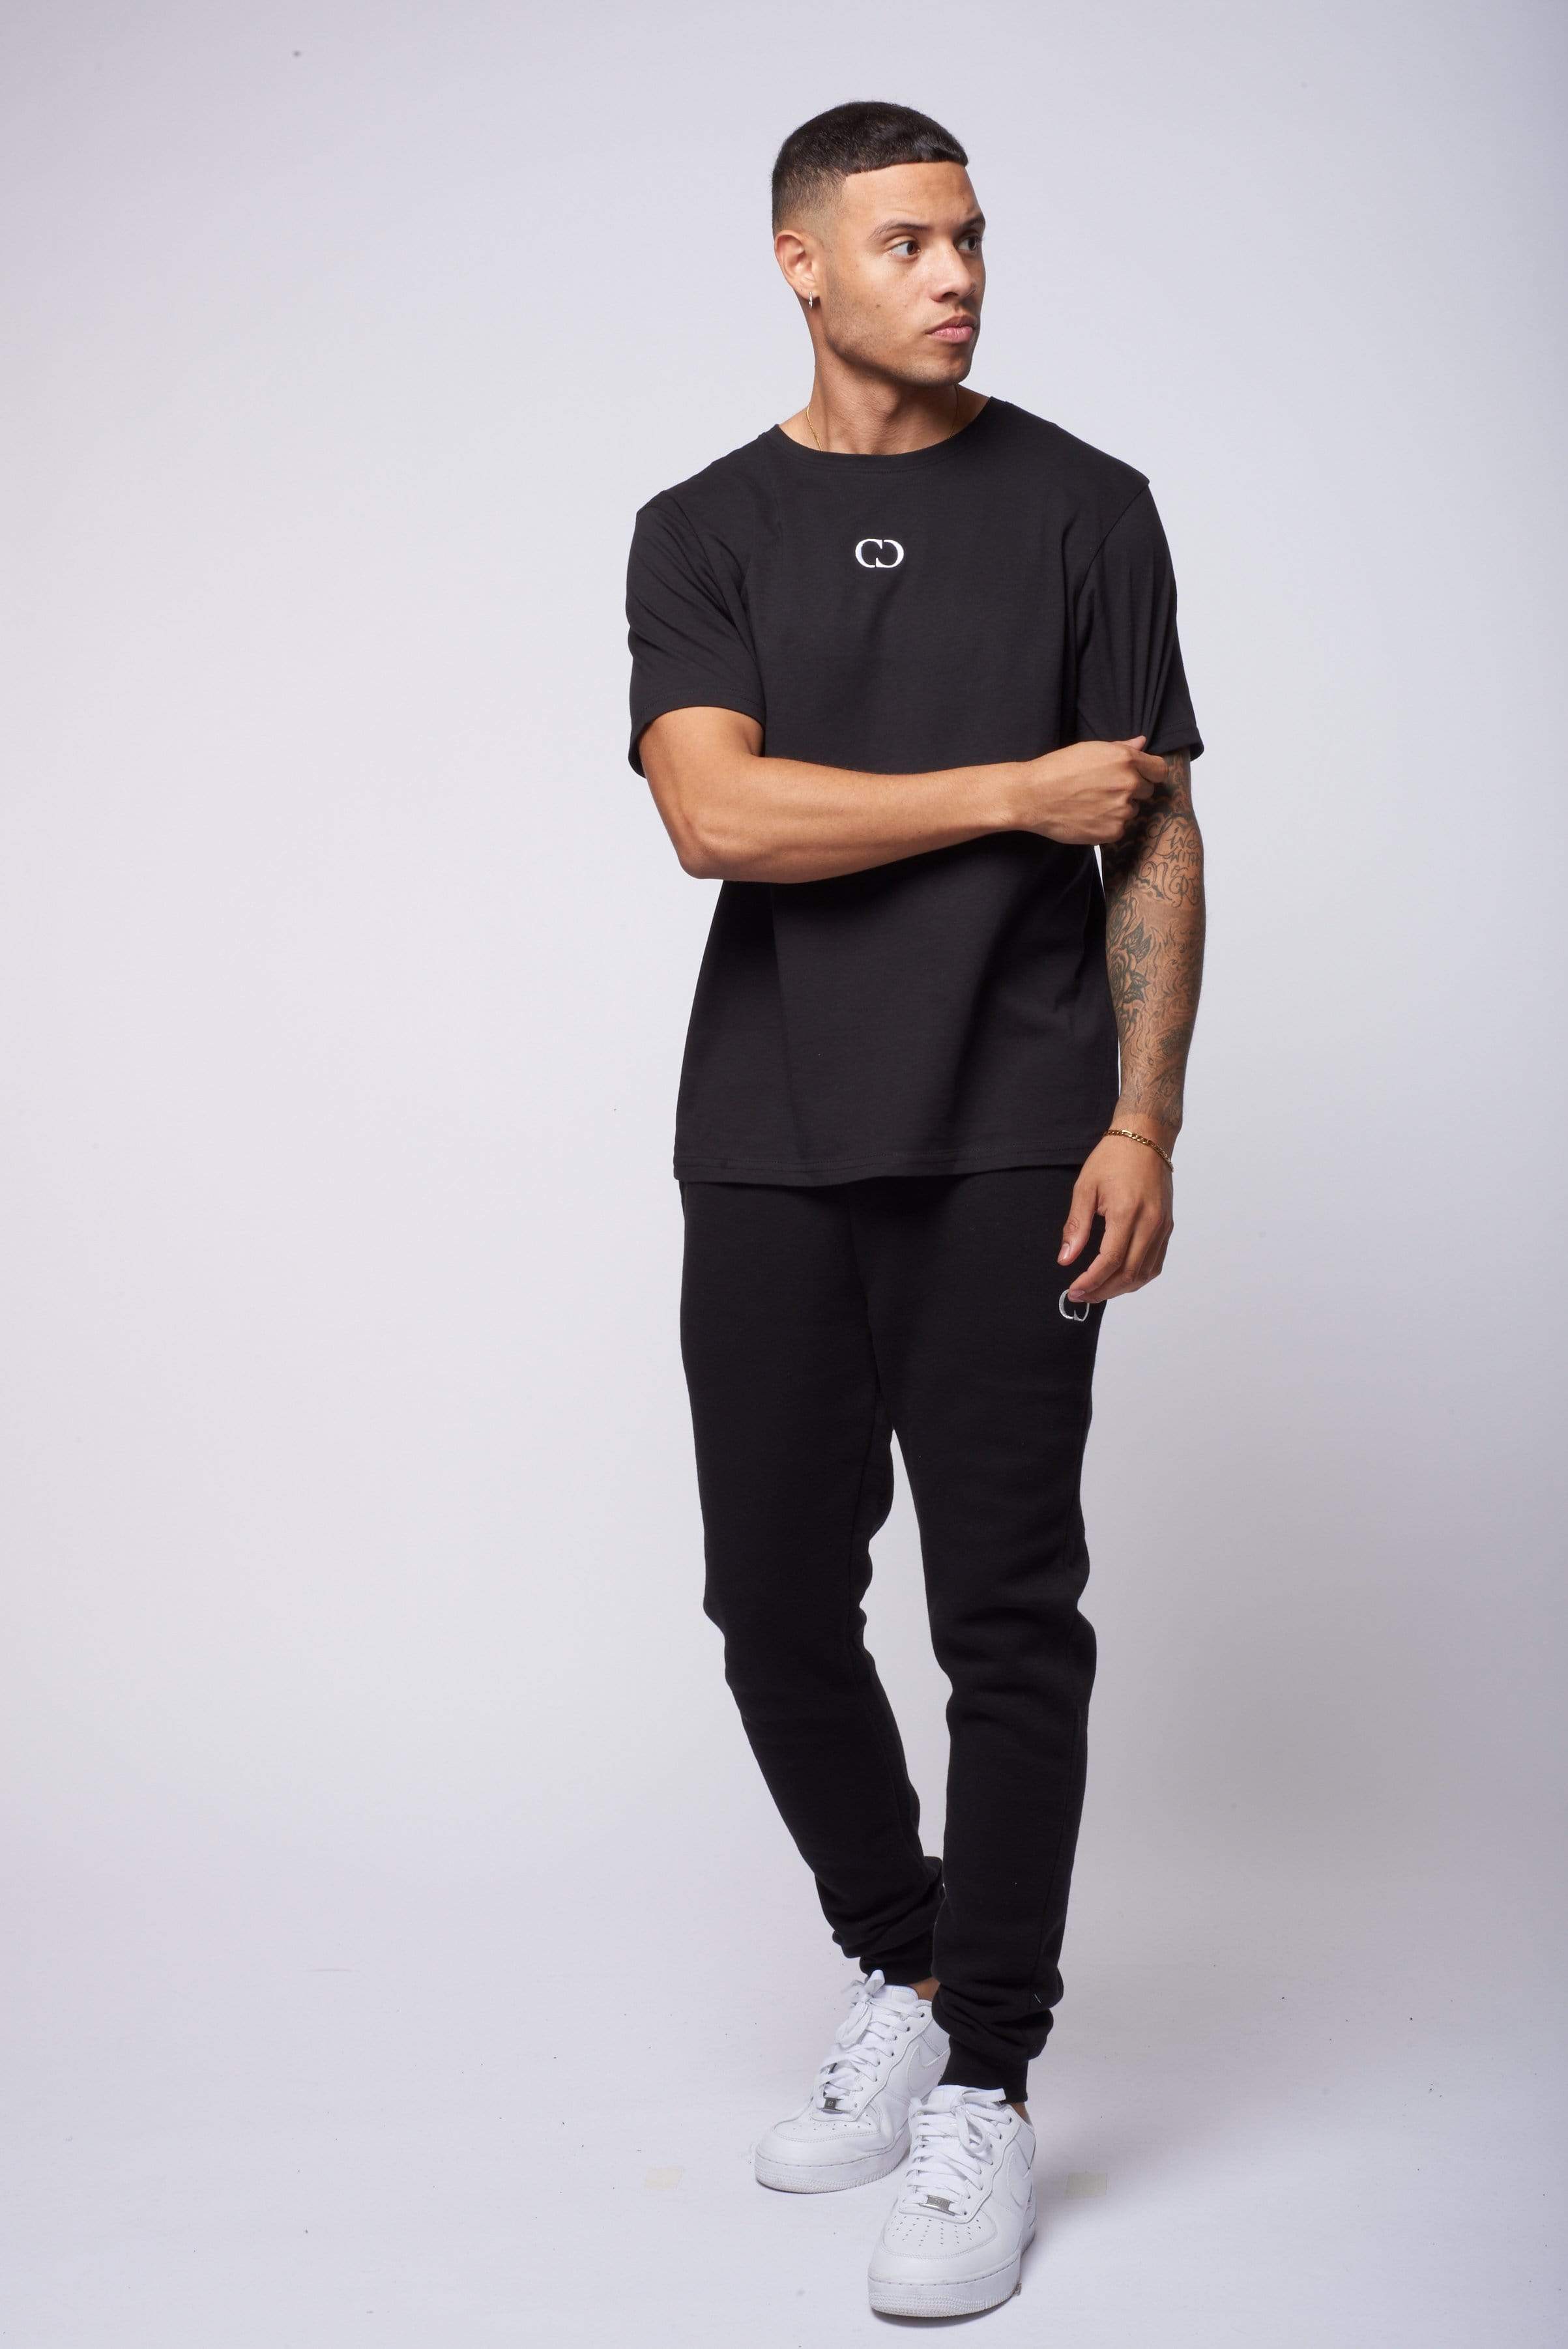 Do black pants go with a black shirt? - Quora